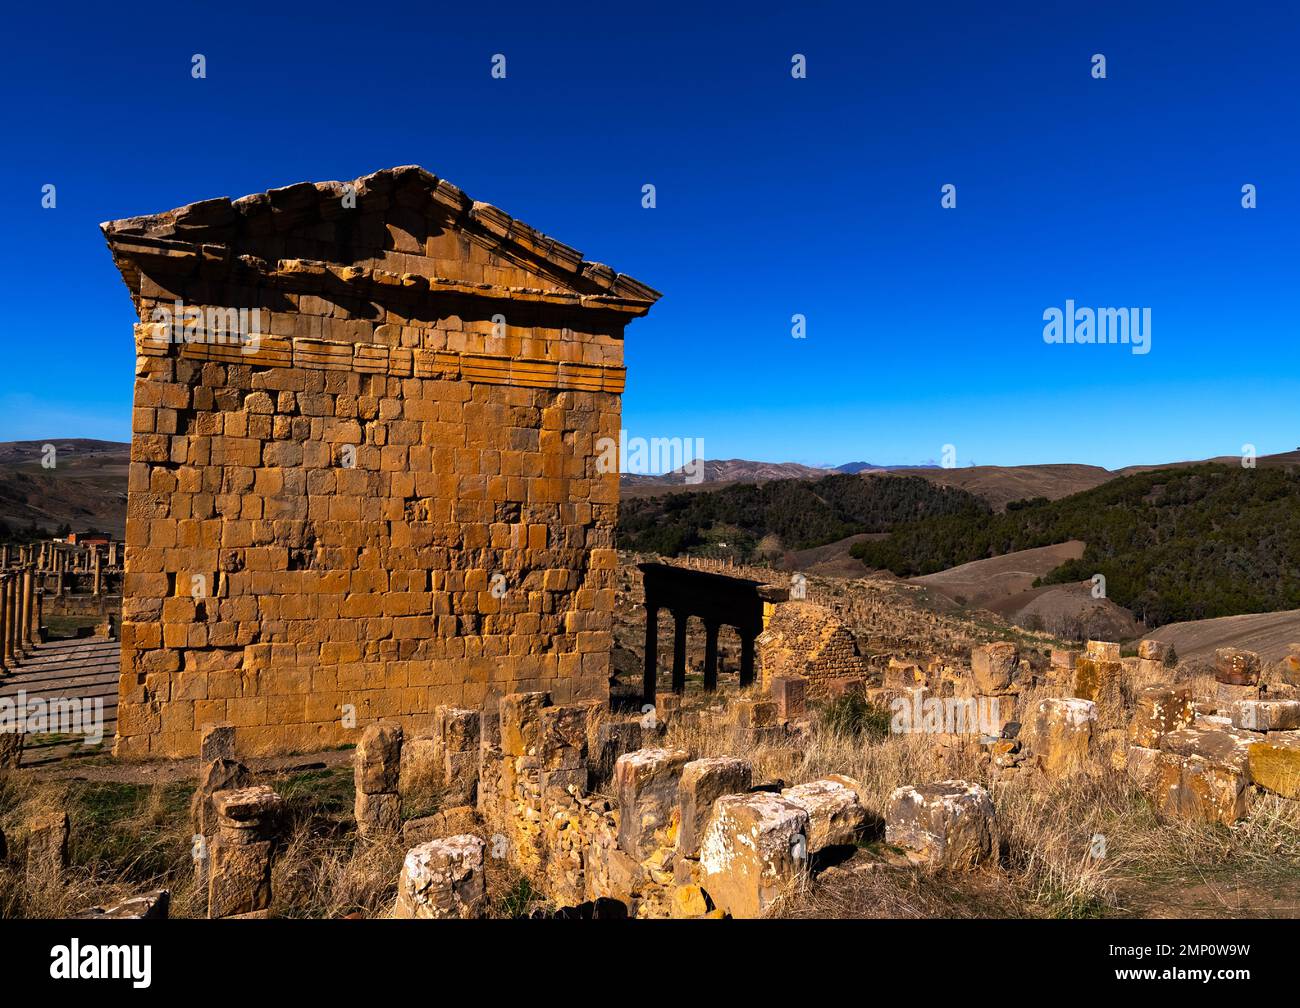 Der Severianische Tempel in den römischen Ruinen, Nordafrika, Djemila, Algerien Stockfoto